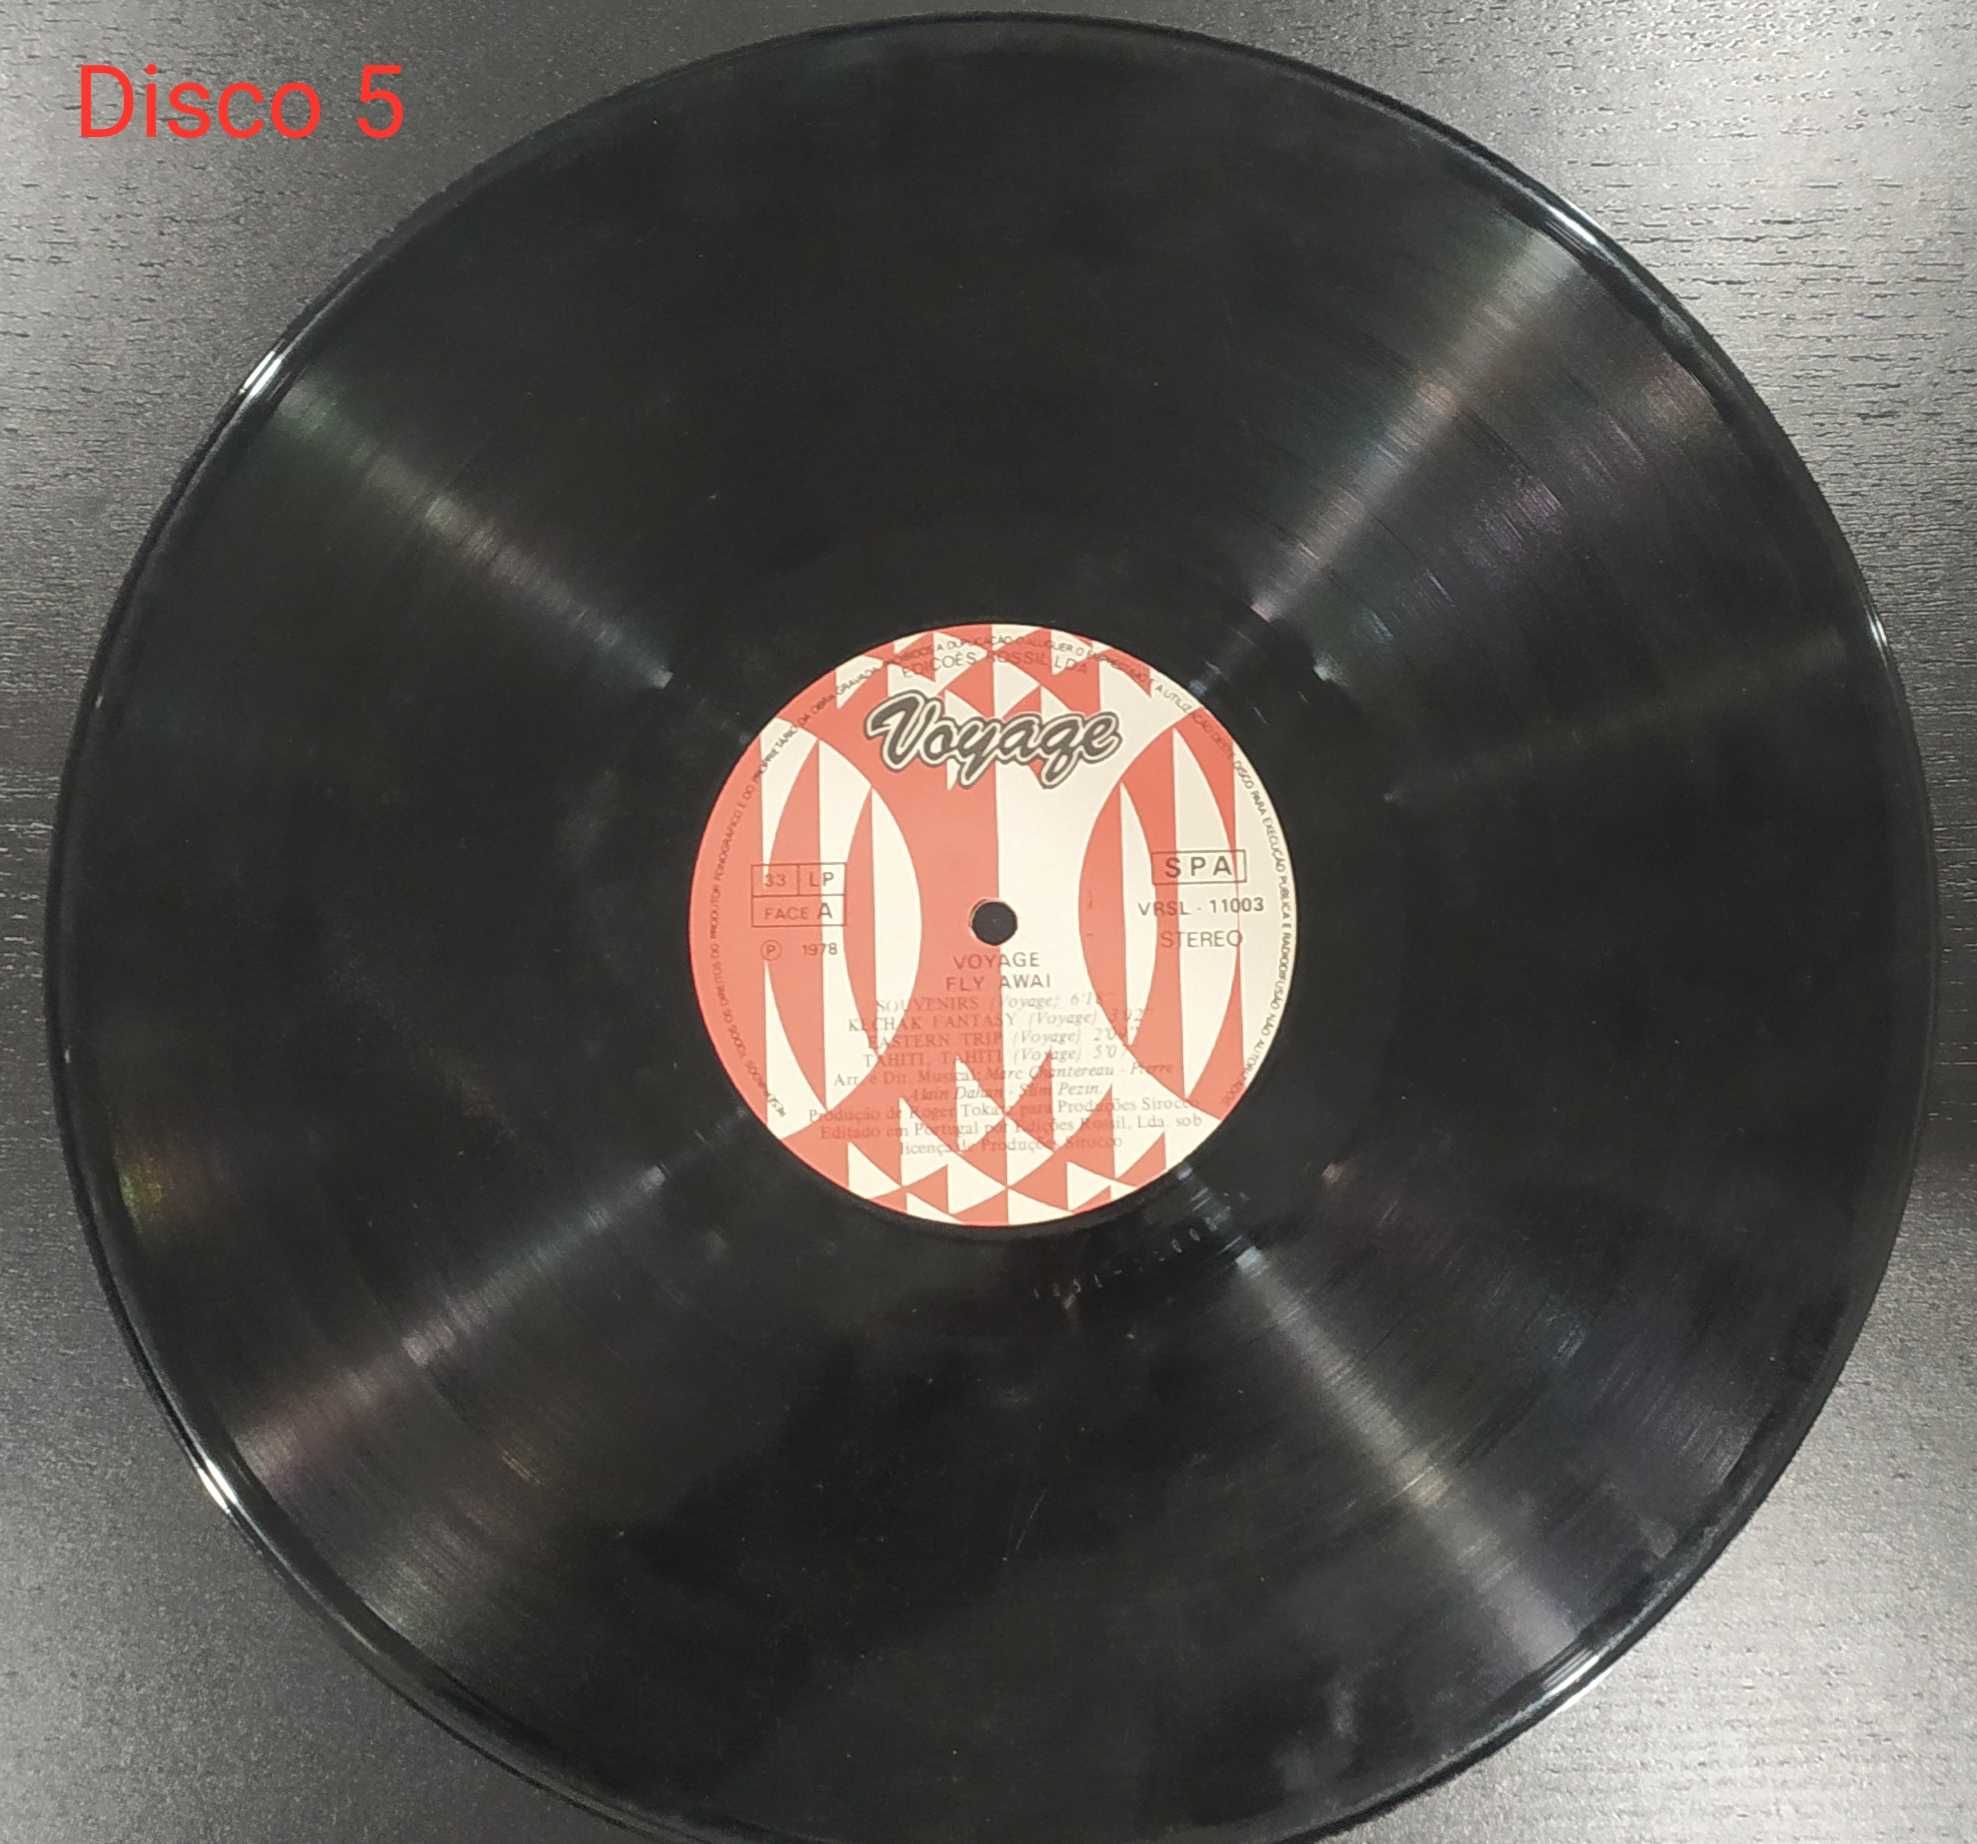 Voyage > Fly Away LP Disco 5